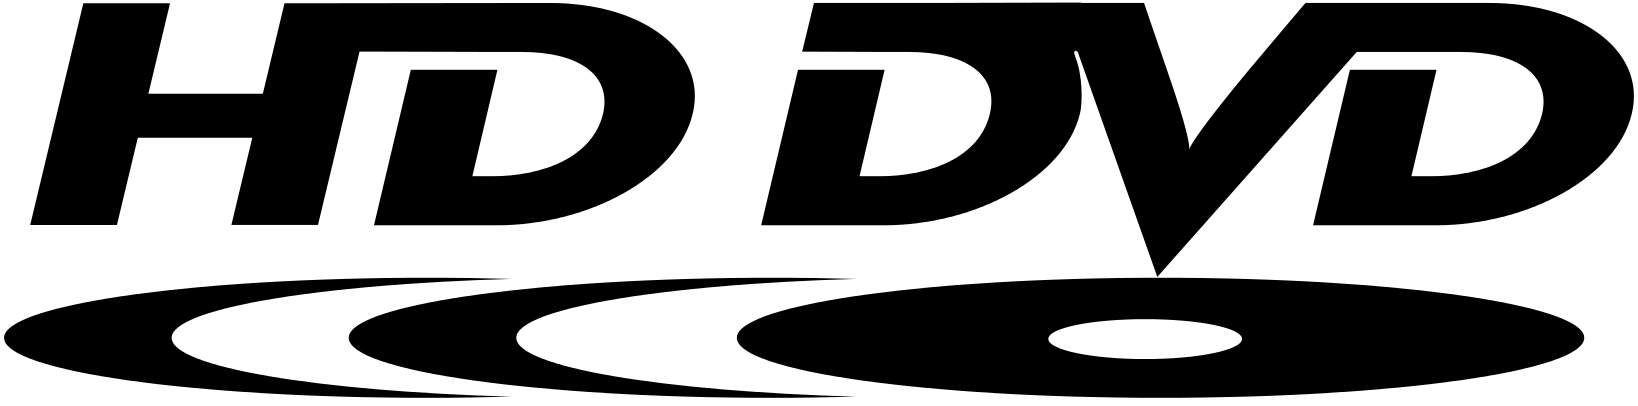 HD DVD Logo - File:Hd dvd logo.png - Wikimedia Commons